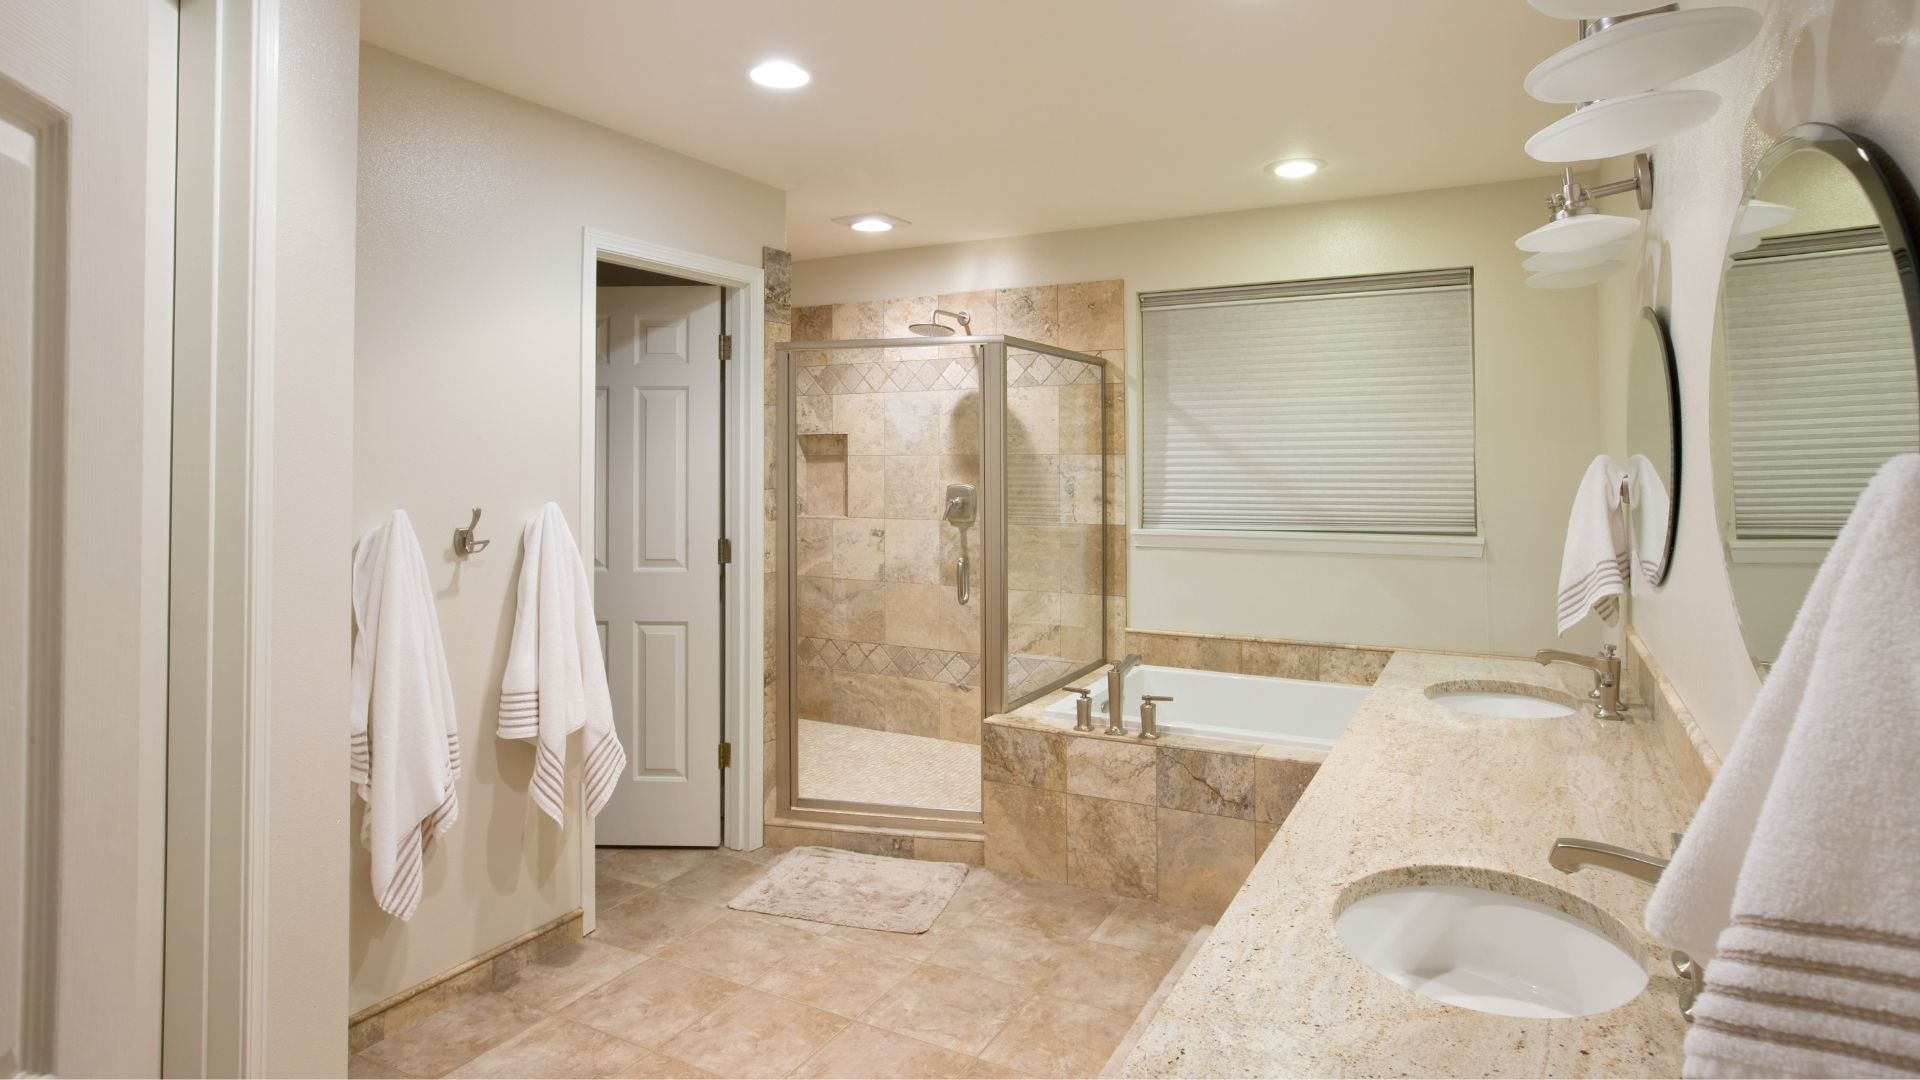 Remodelled bathroom installed by Sarasota Bathroom Remodels